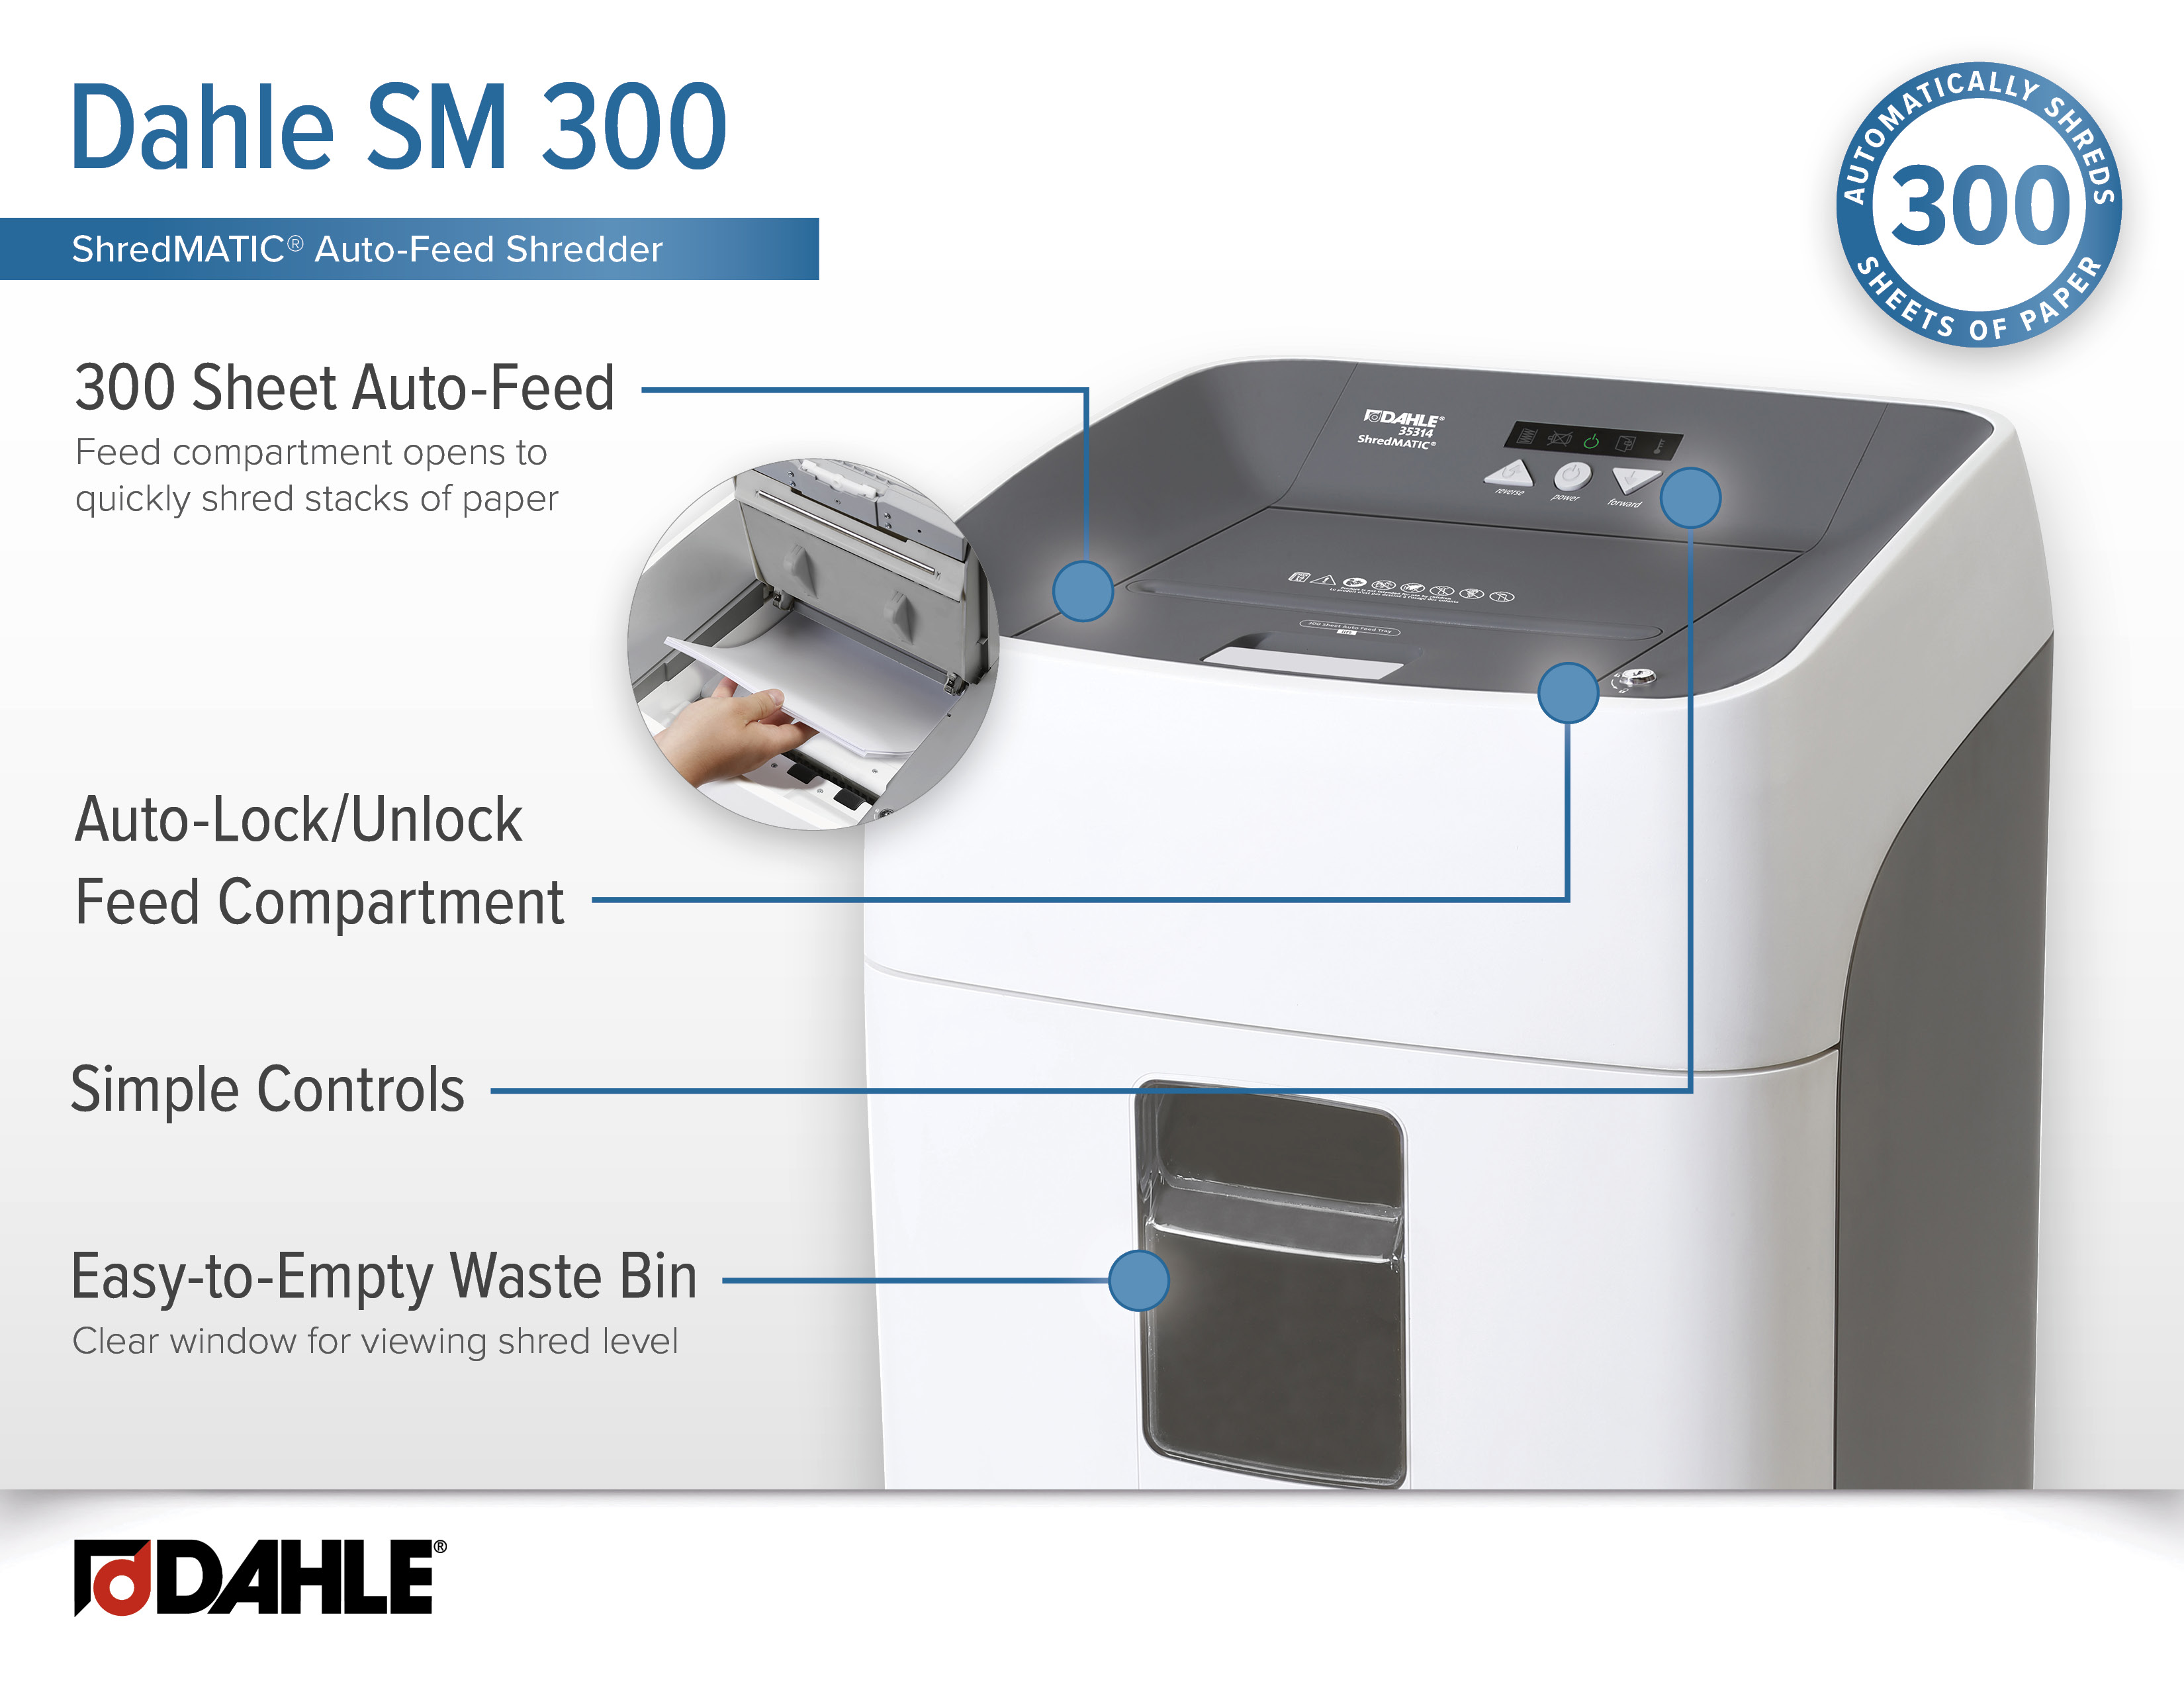 Dahle ShredMATIC® SM 300 Auto-Feed Shredder Infographic